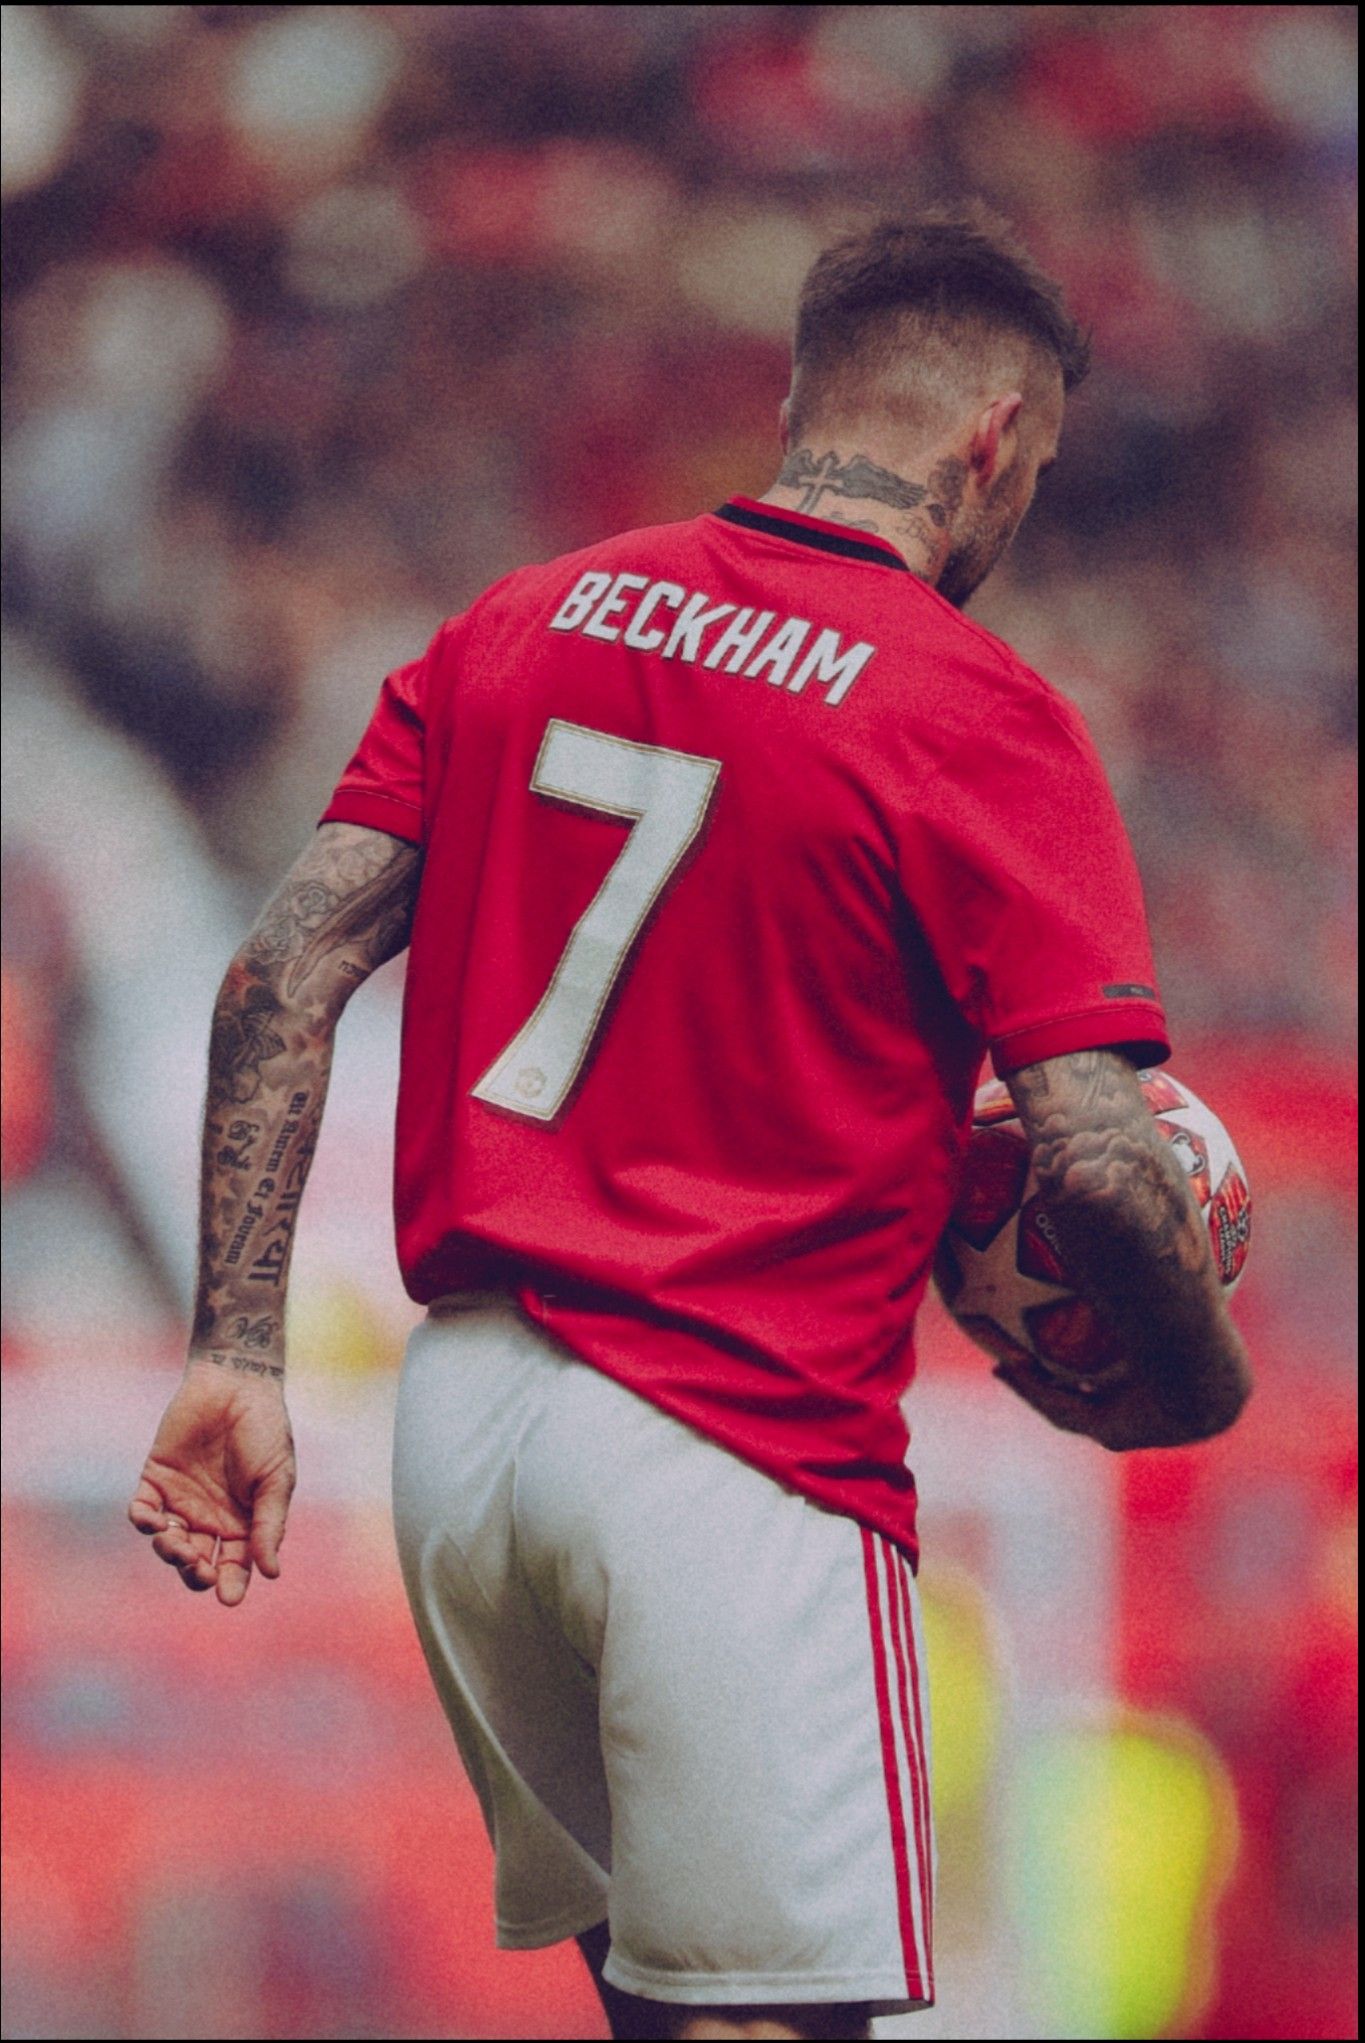 24+] David Beckham Football Wallpapers - WallpaperSafari